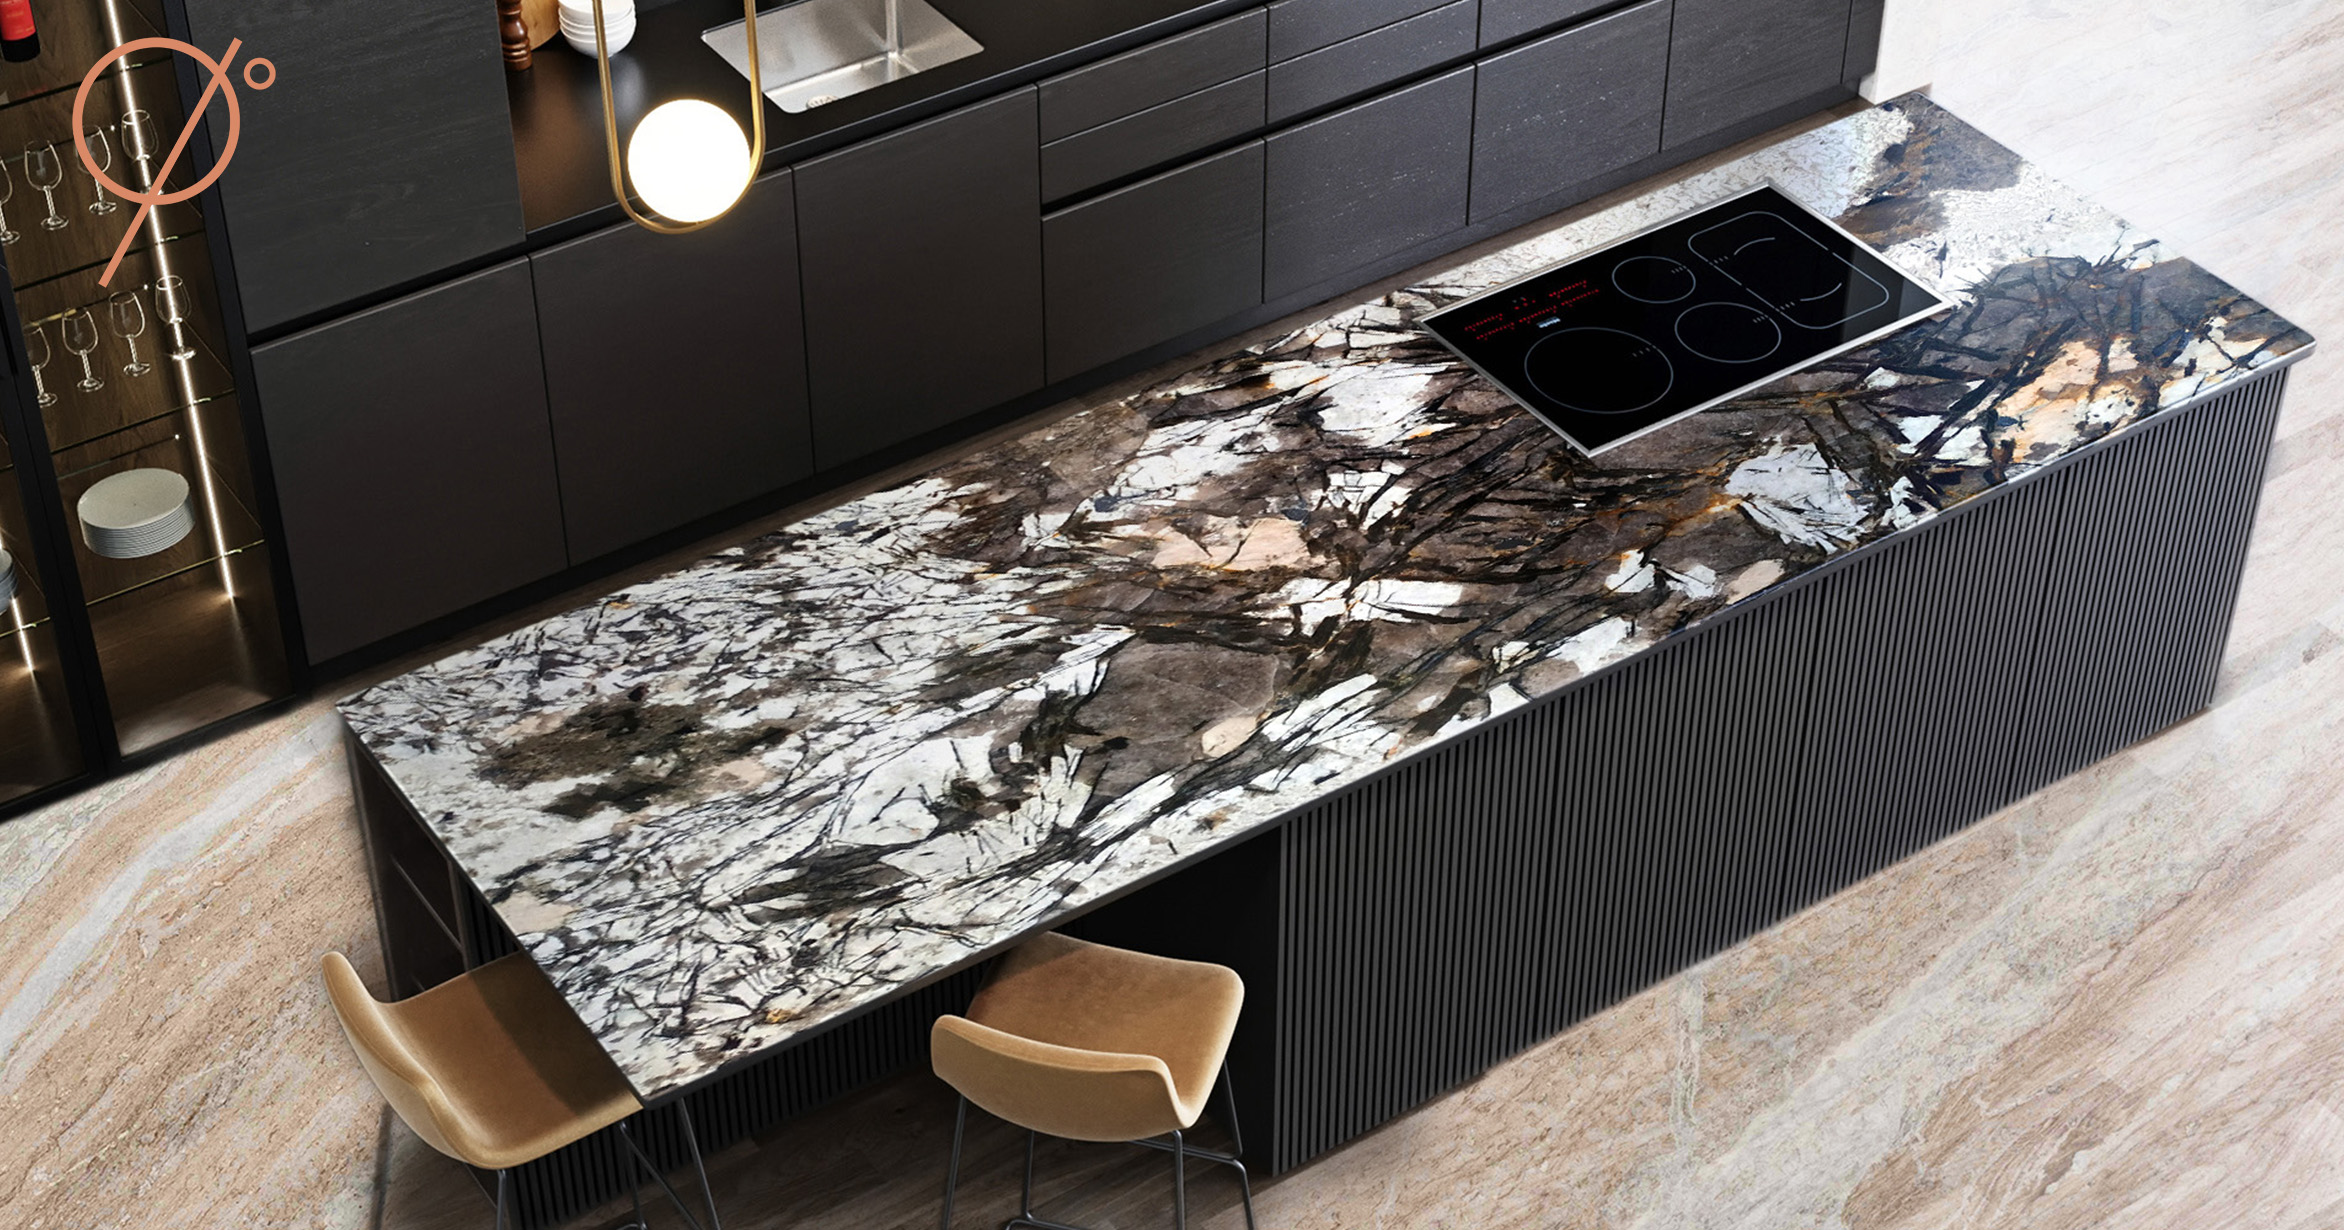 Granite in kitchen: Granite countertop & kitchen island, granite flooring; Ninety Degree Stone